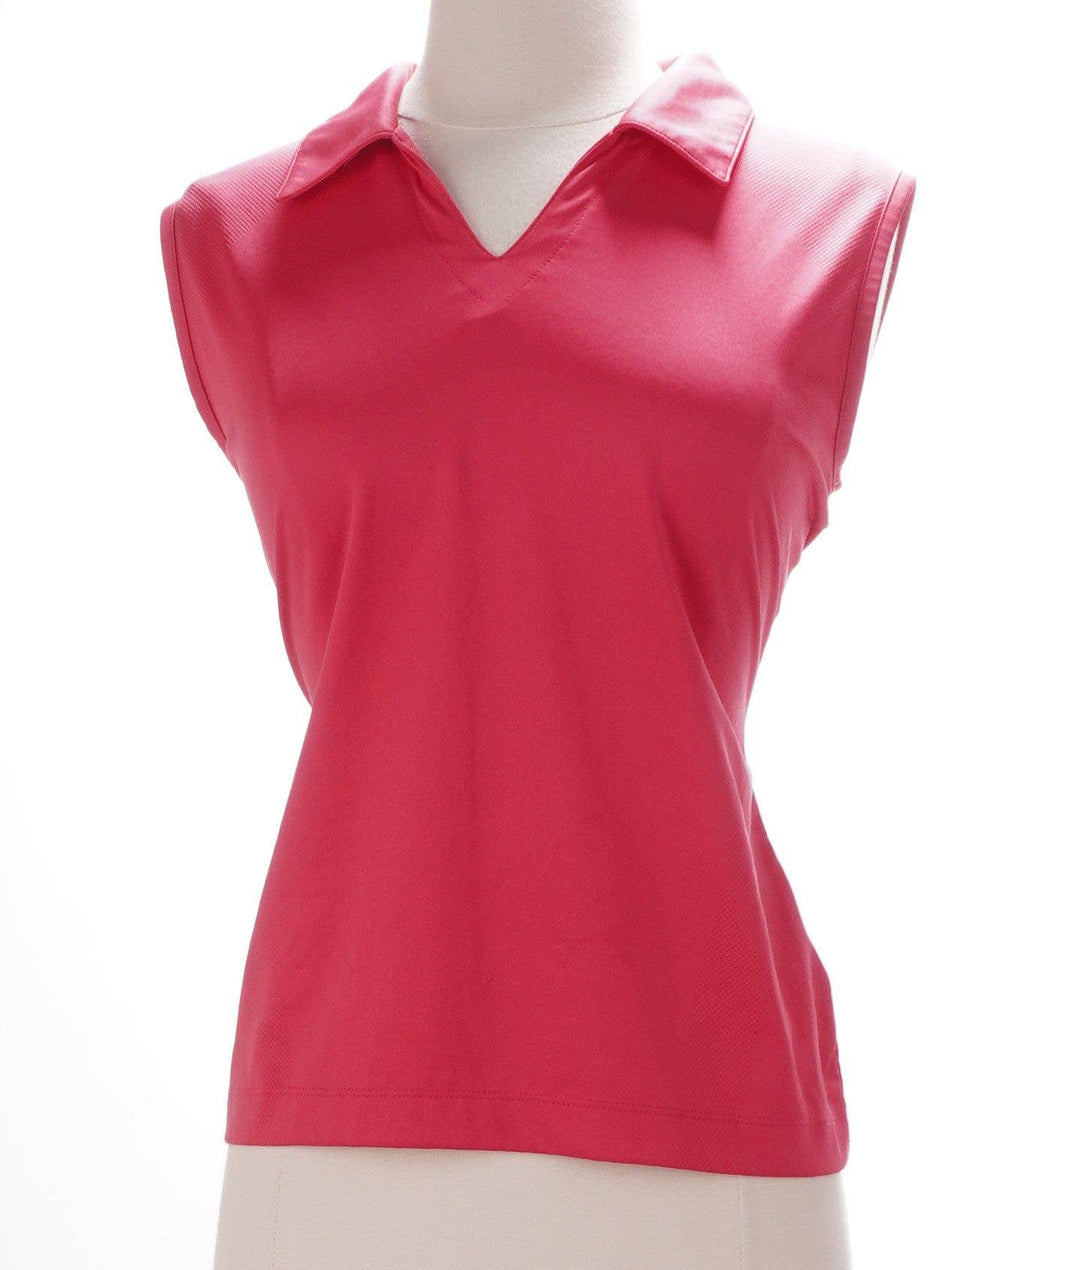 Nike Golf Medium / Pink / Consigned Nike Golf Sleeveless Top - Pink - Size Medium